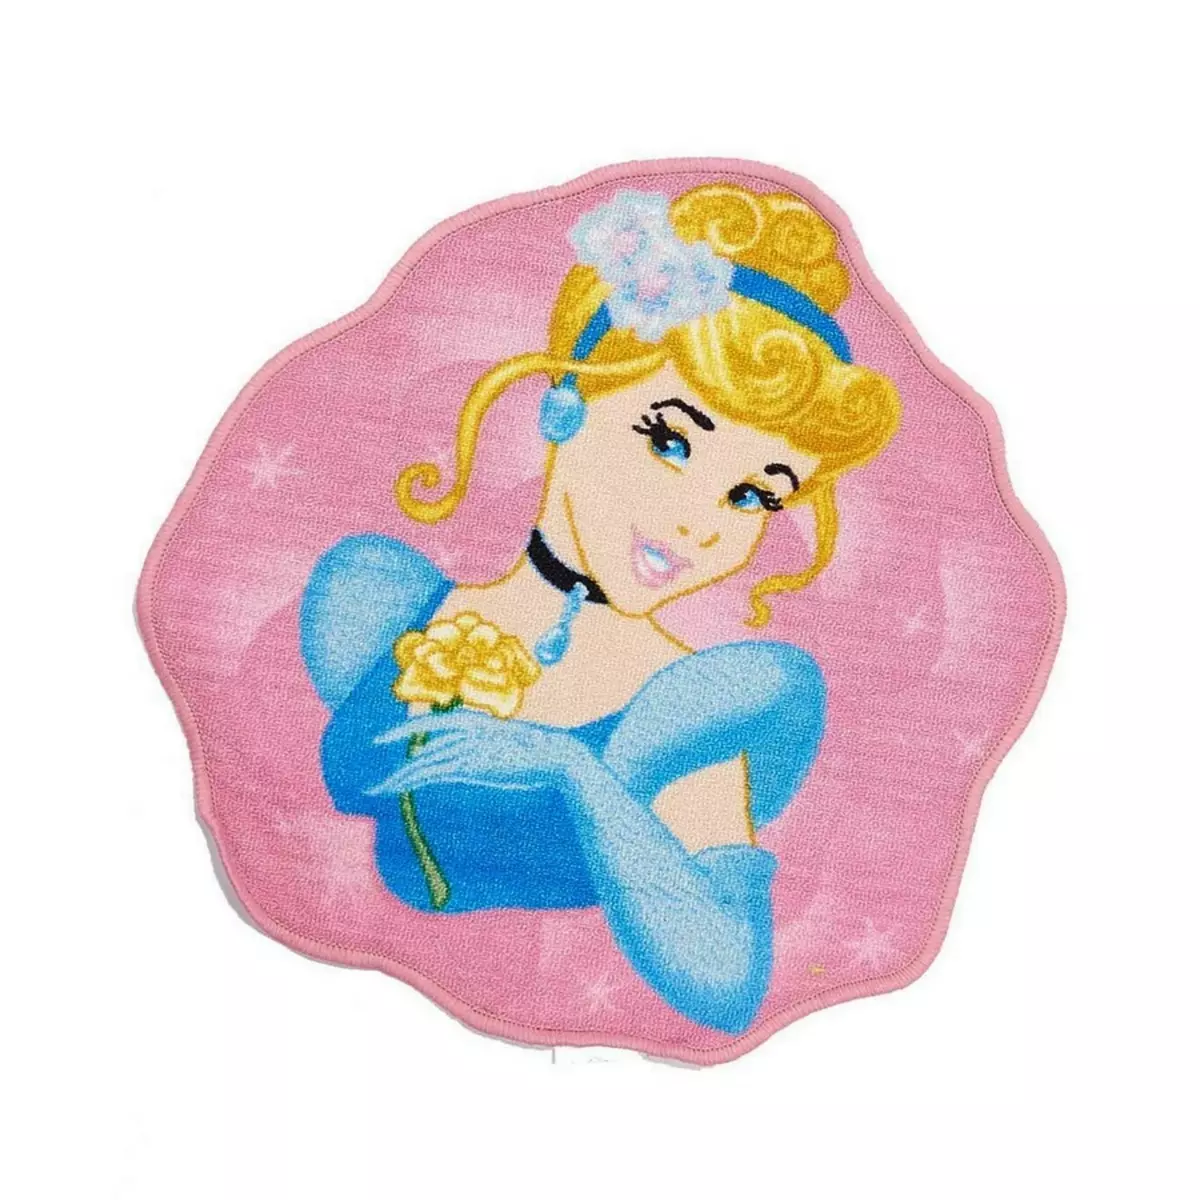  Tapis enfant Cendrillon Disney 67 x 67 cm Princesse